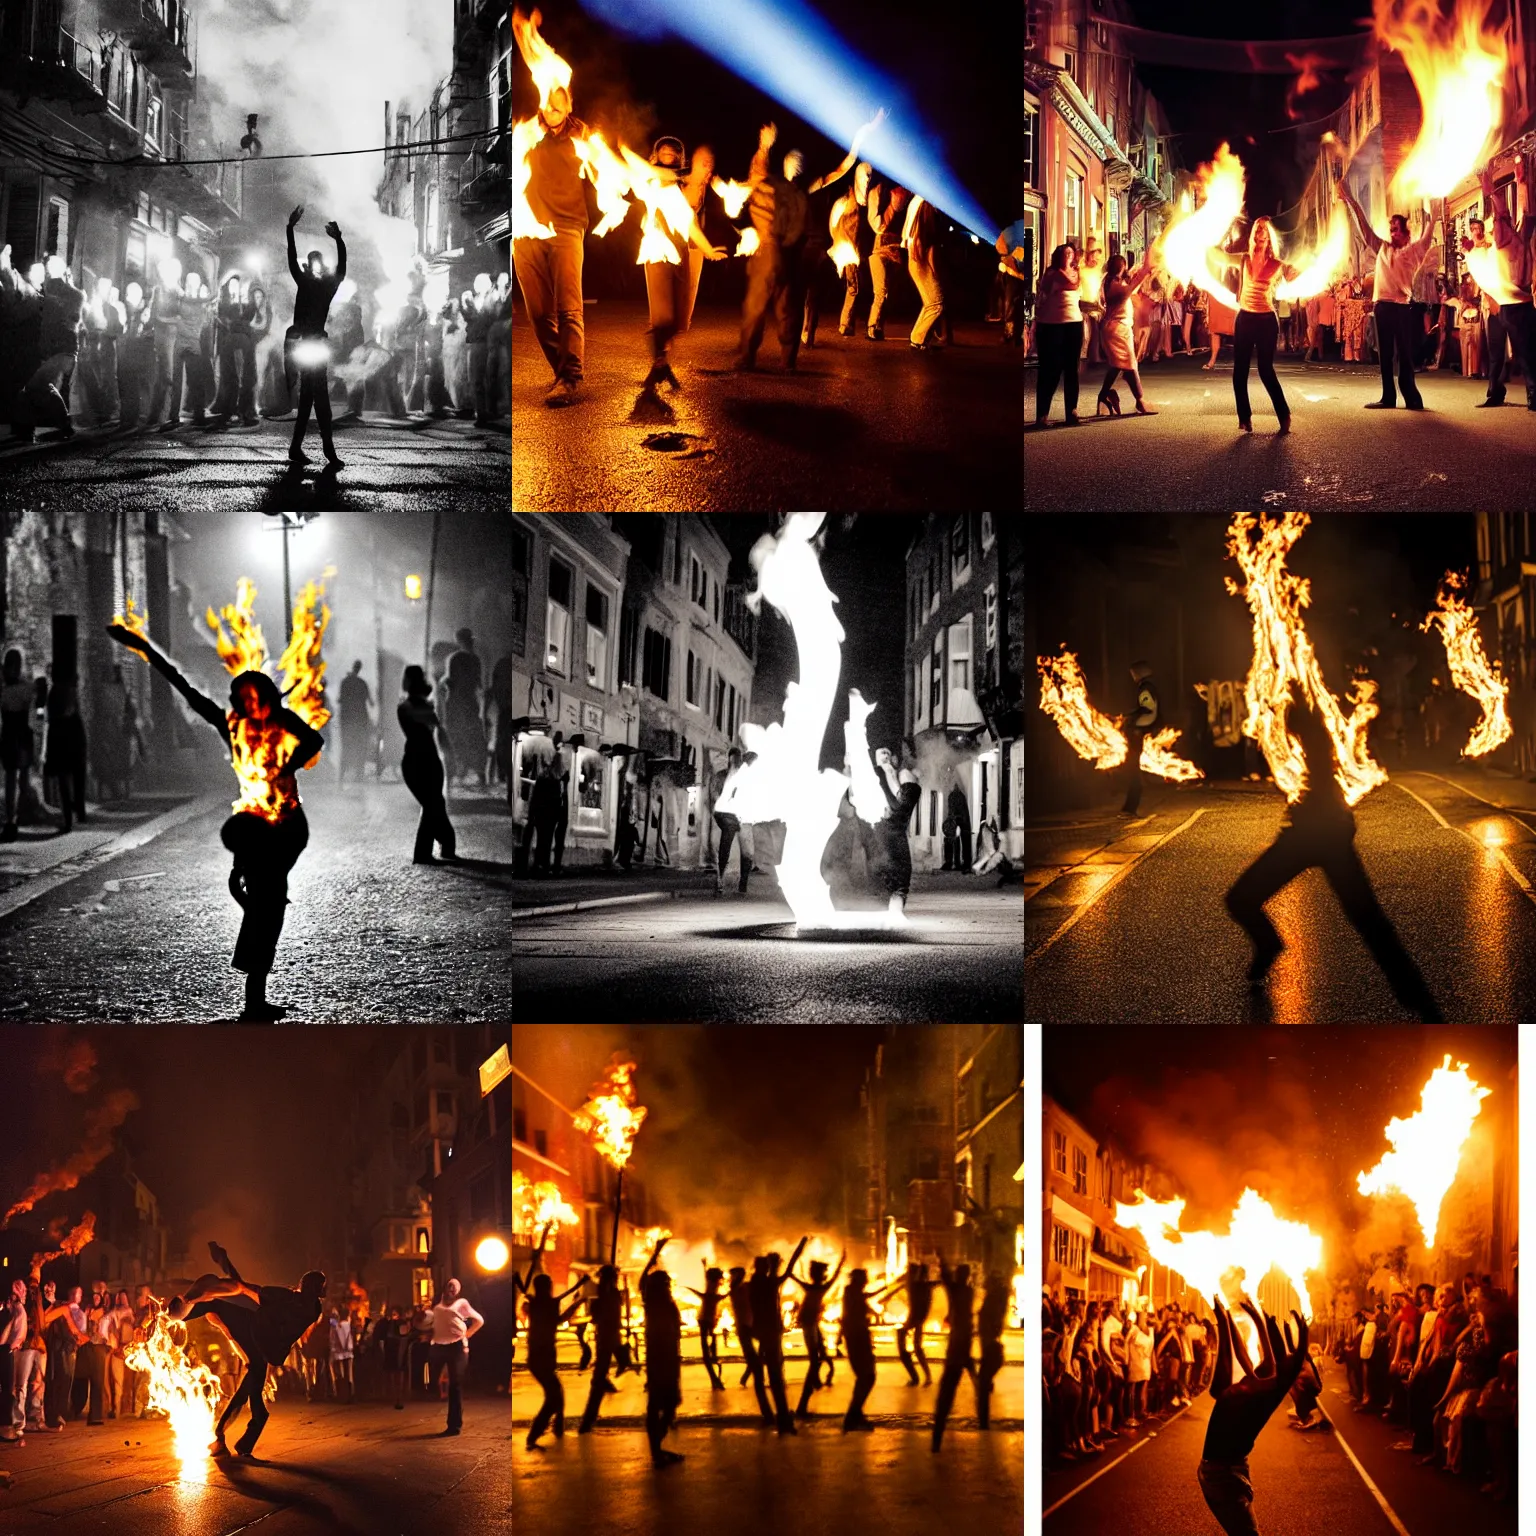 Prompt: dancing fires in a dark street, award winning photo